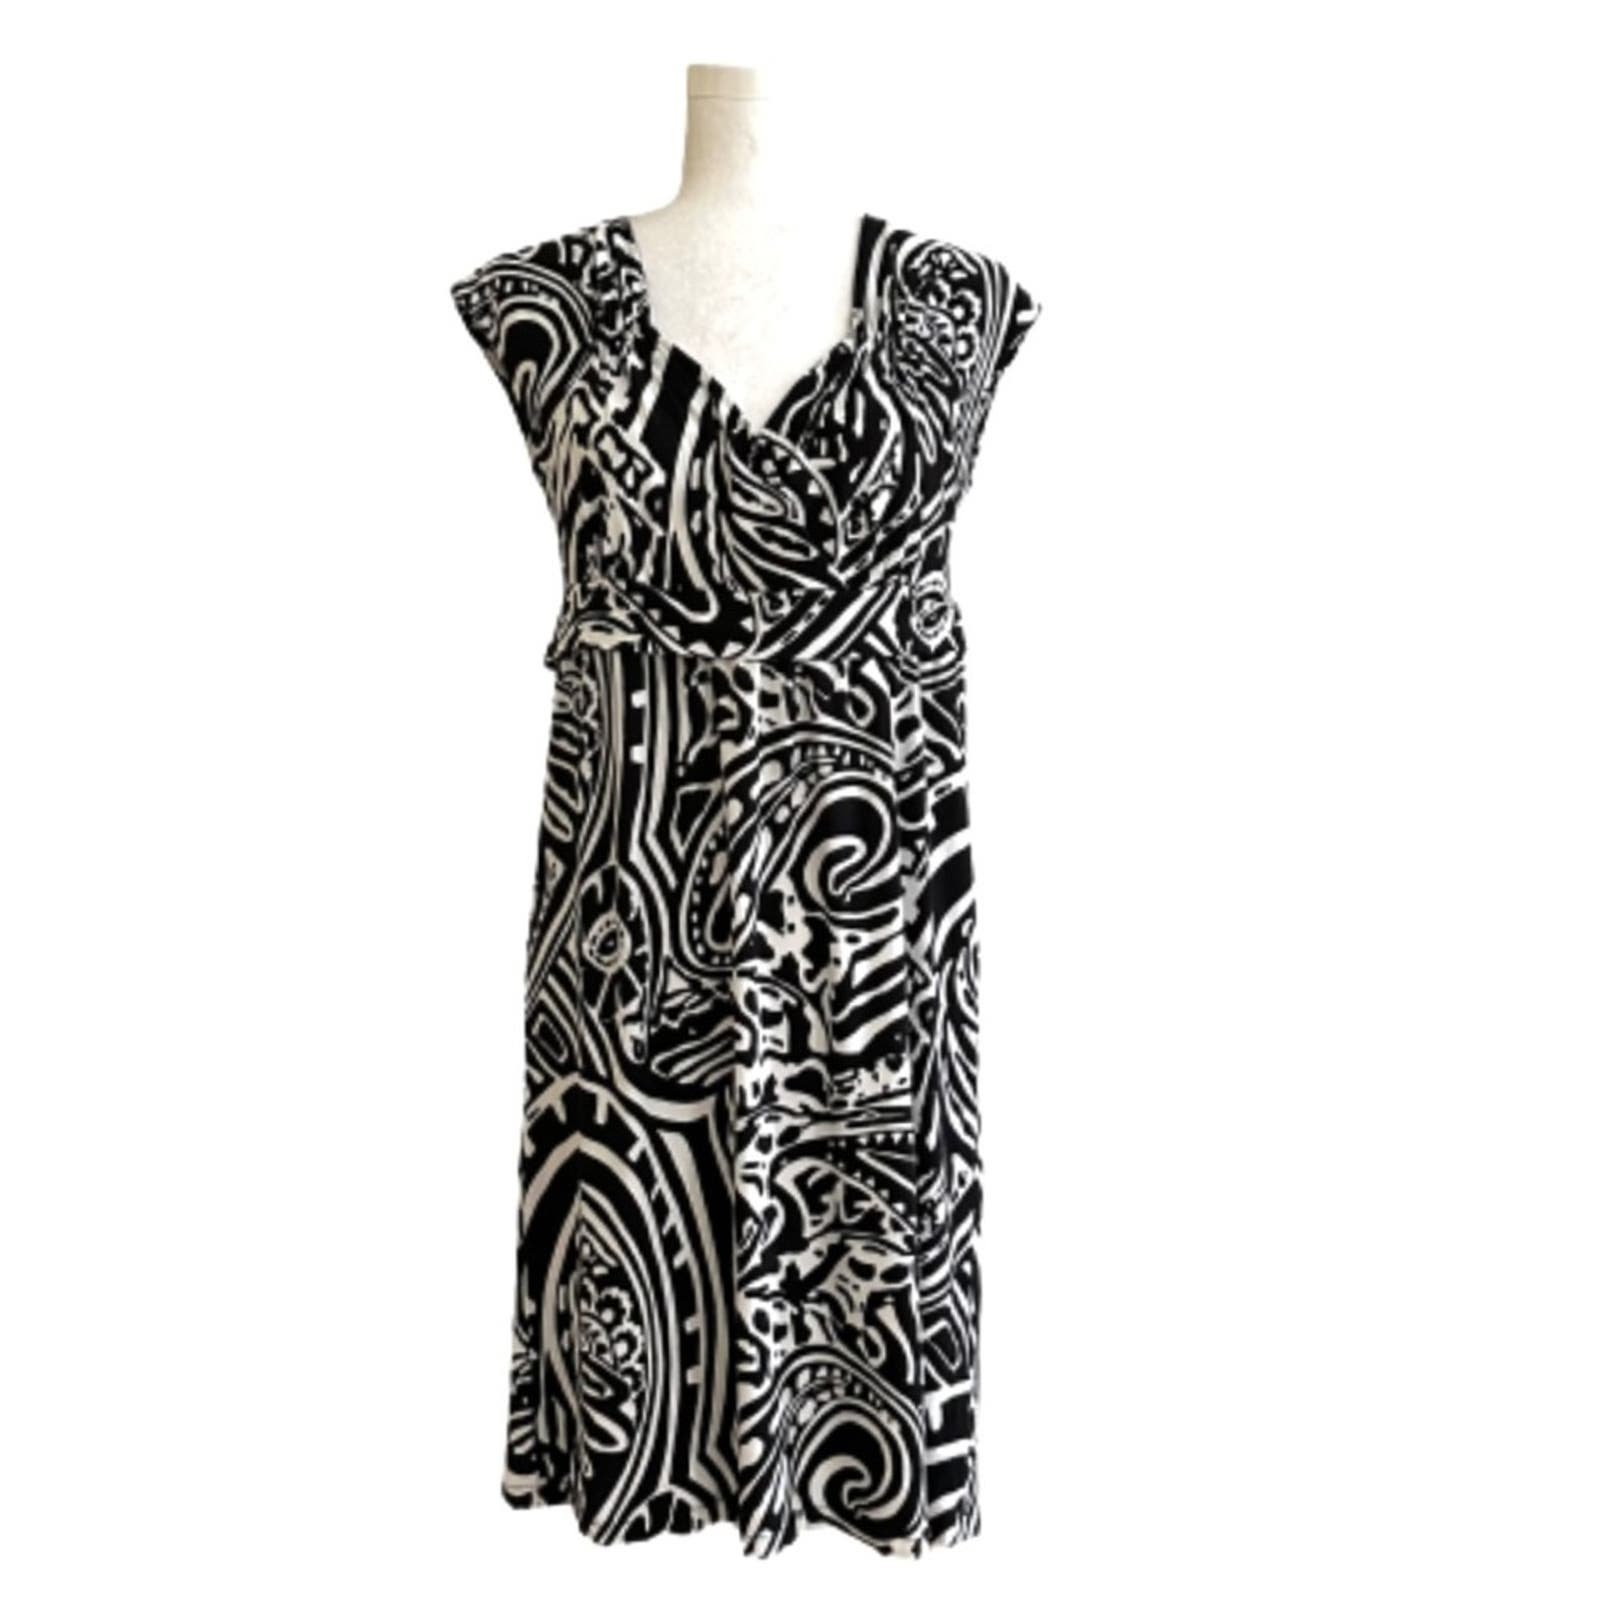 Banana Republic Factory Black White Print Cap Sleeveless Casual Dress Medium NEW g0QsQ0eI0